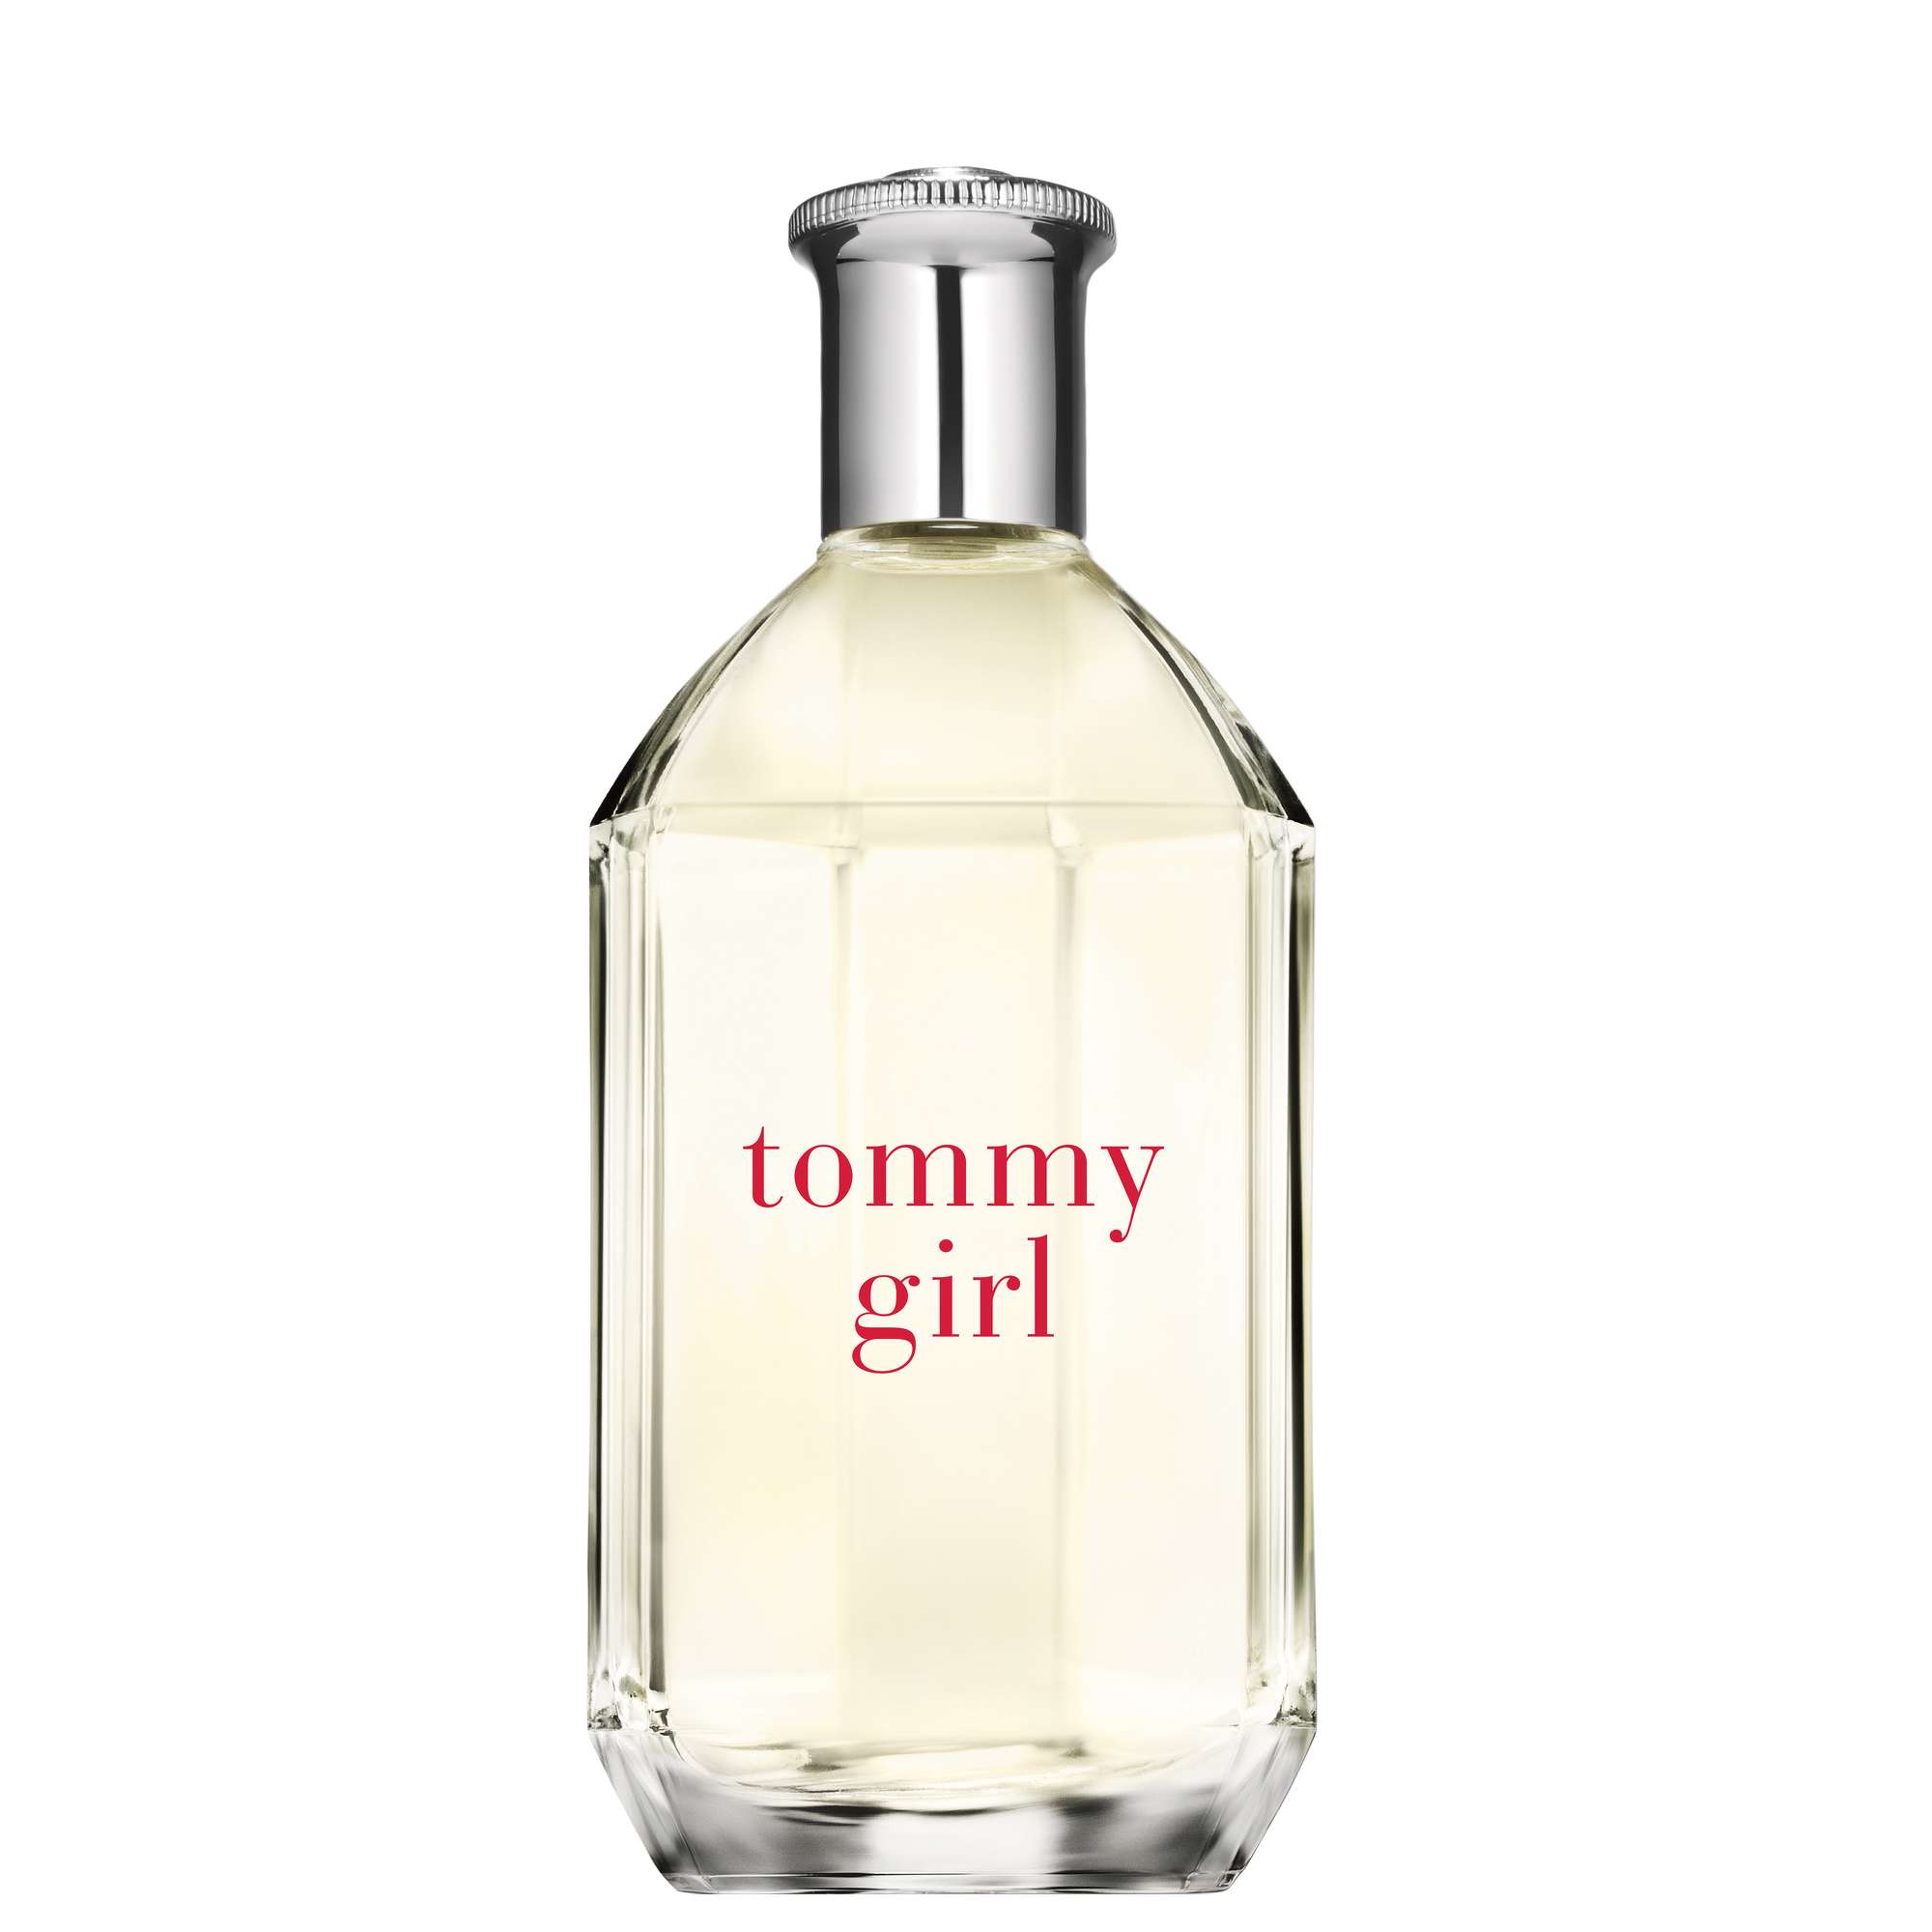 Photos - Women's Fragrance Tommy Hilfiger Tommy Girl Eau de Toilette Spray 50ml 